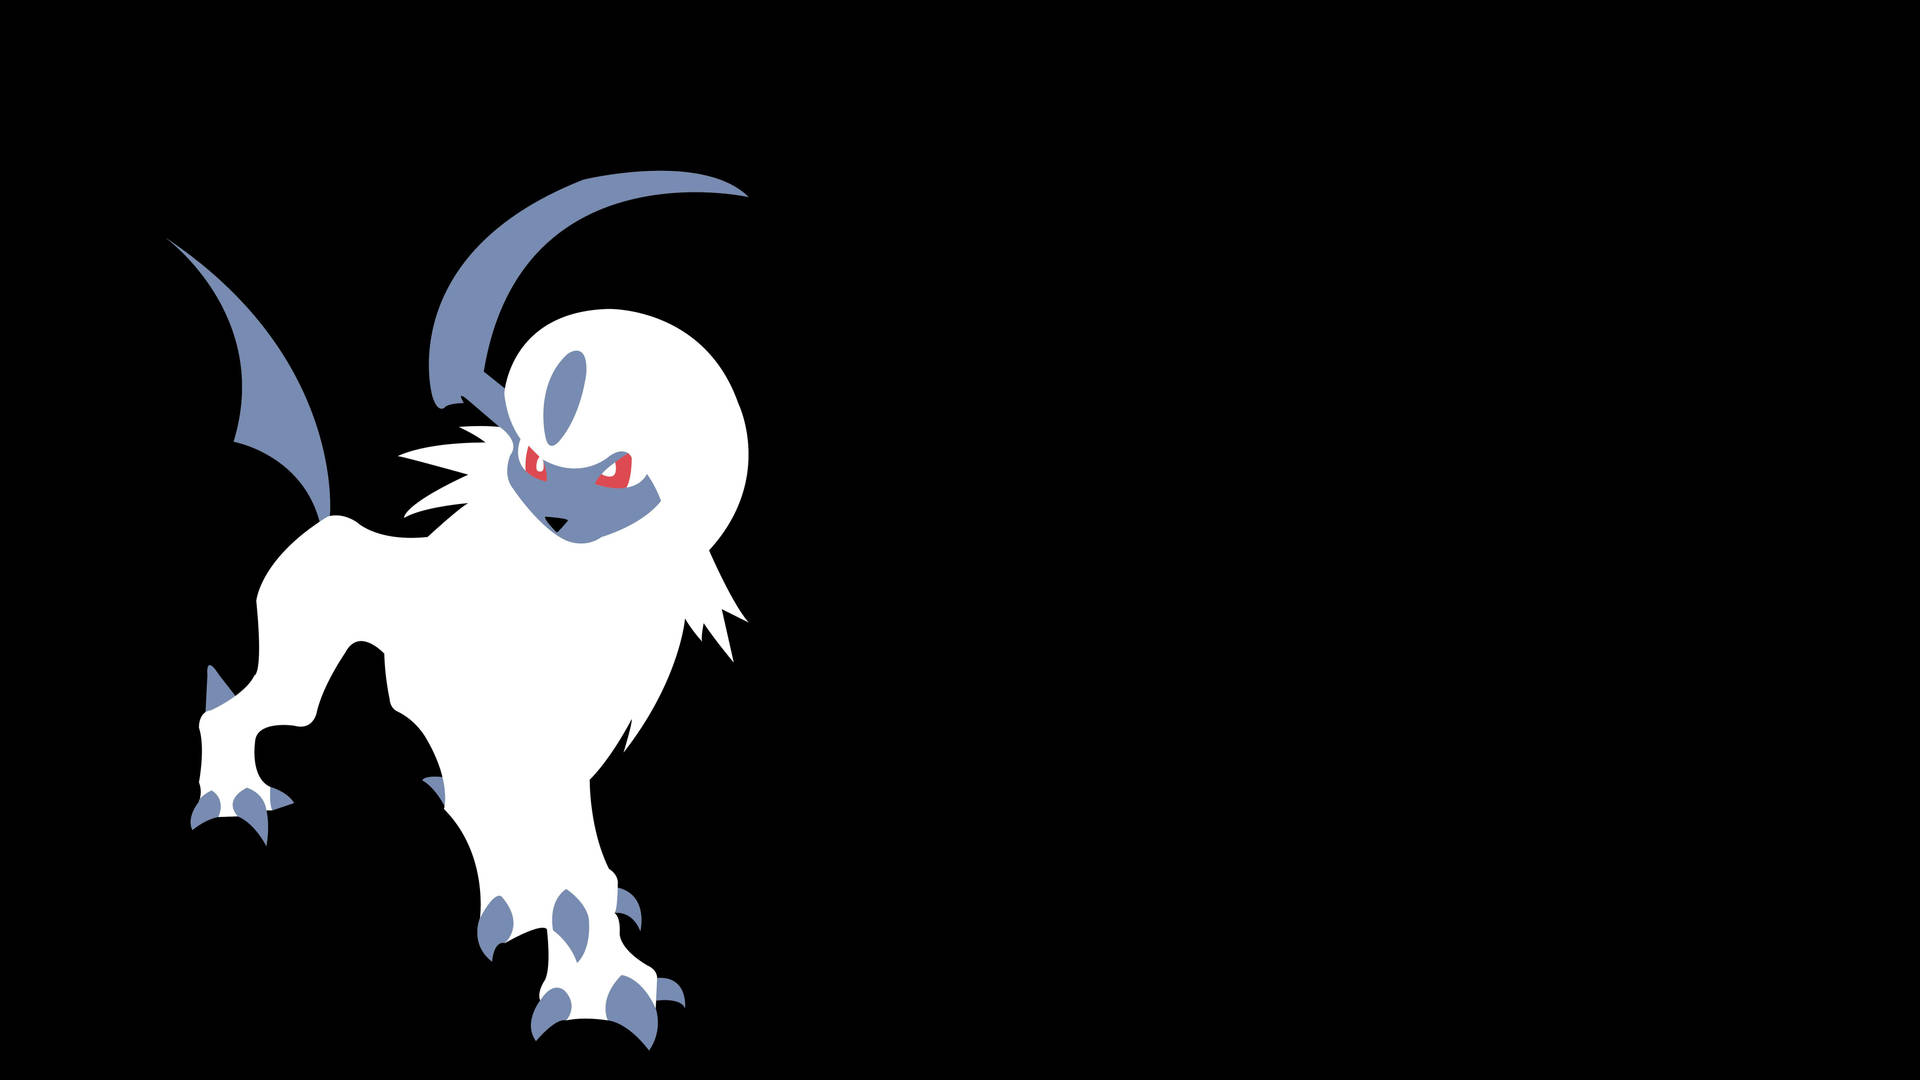 Mystic Absol Pokémon on Dark Background Wallpaper